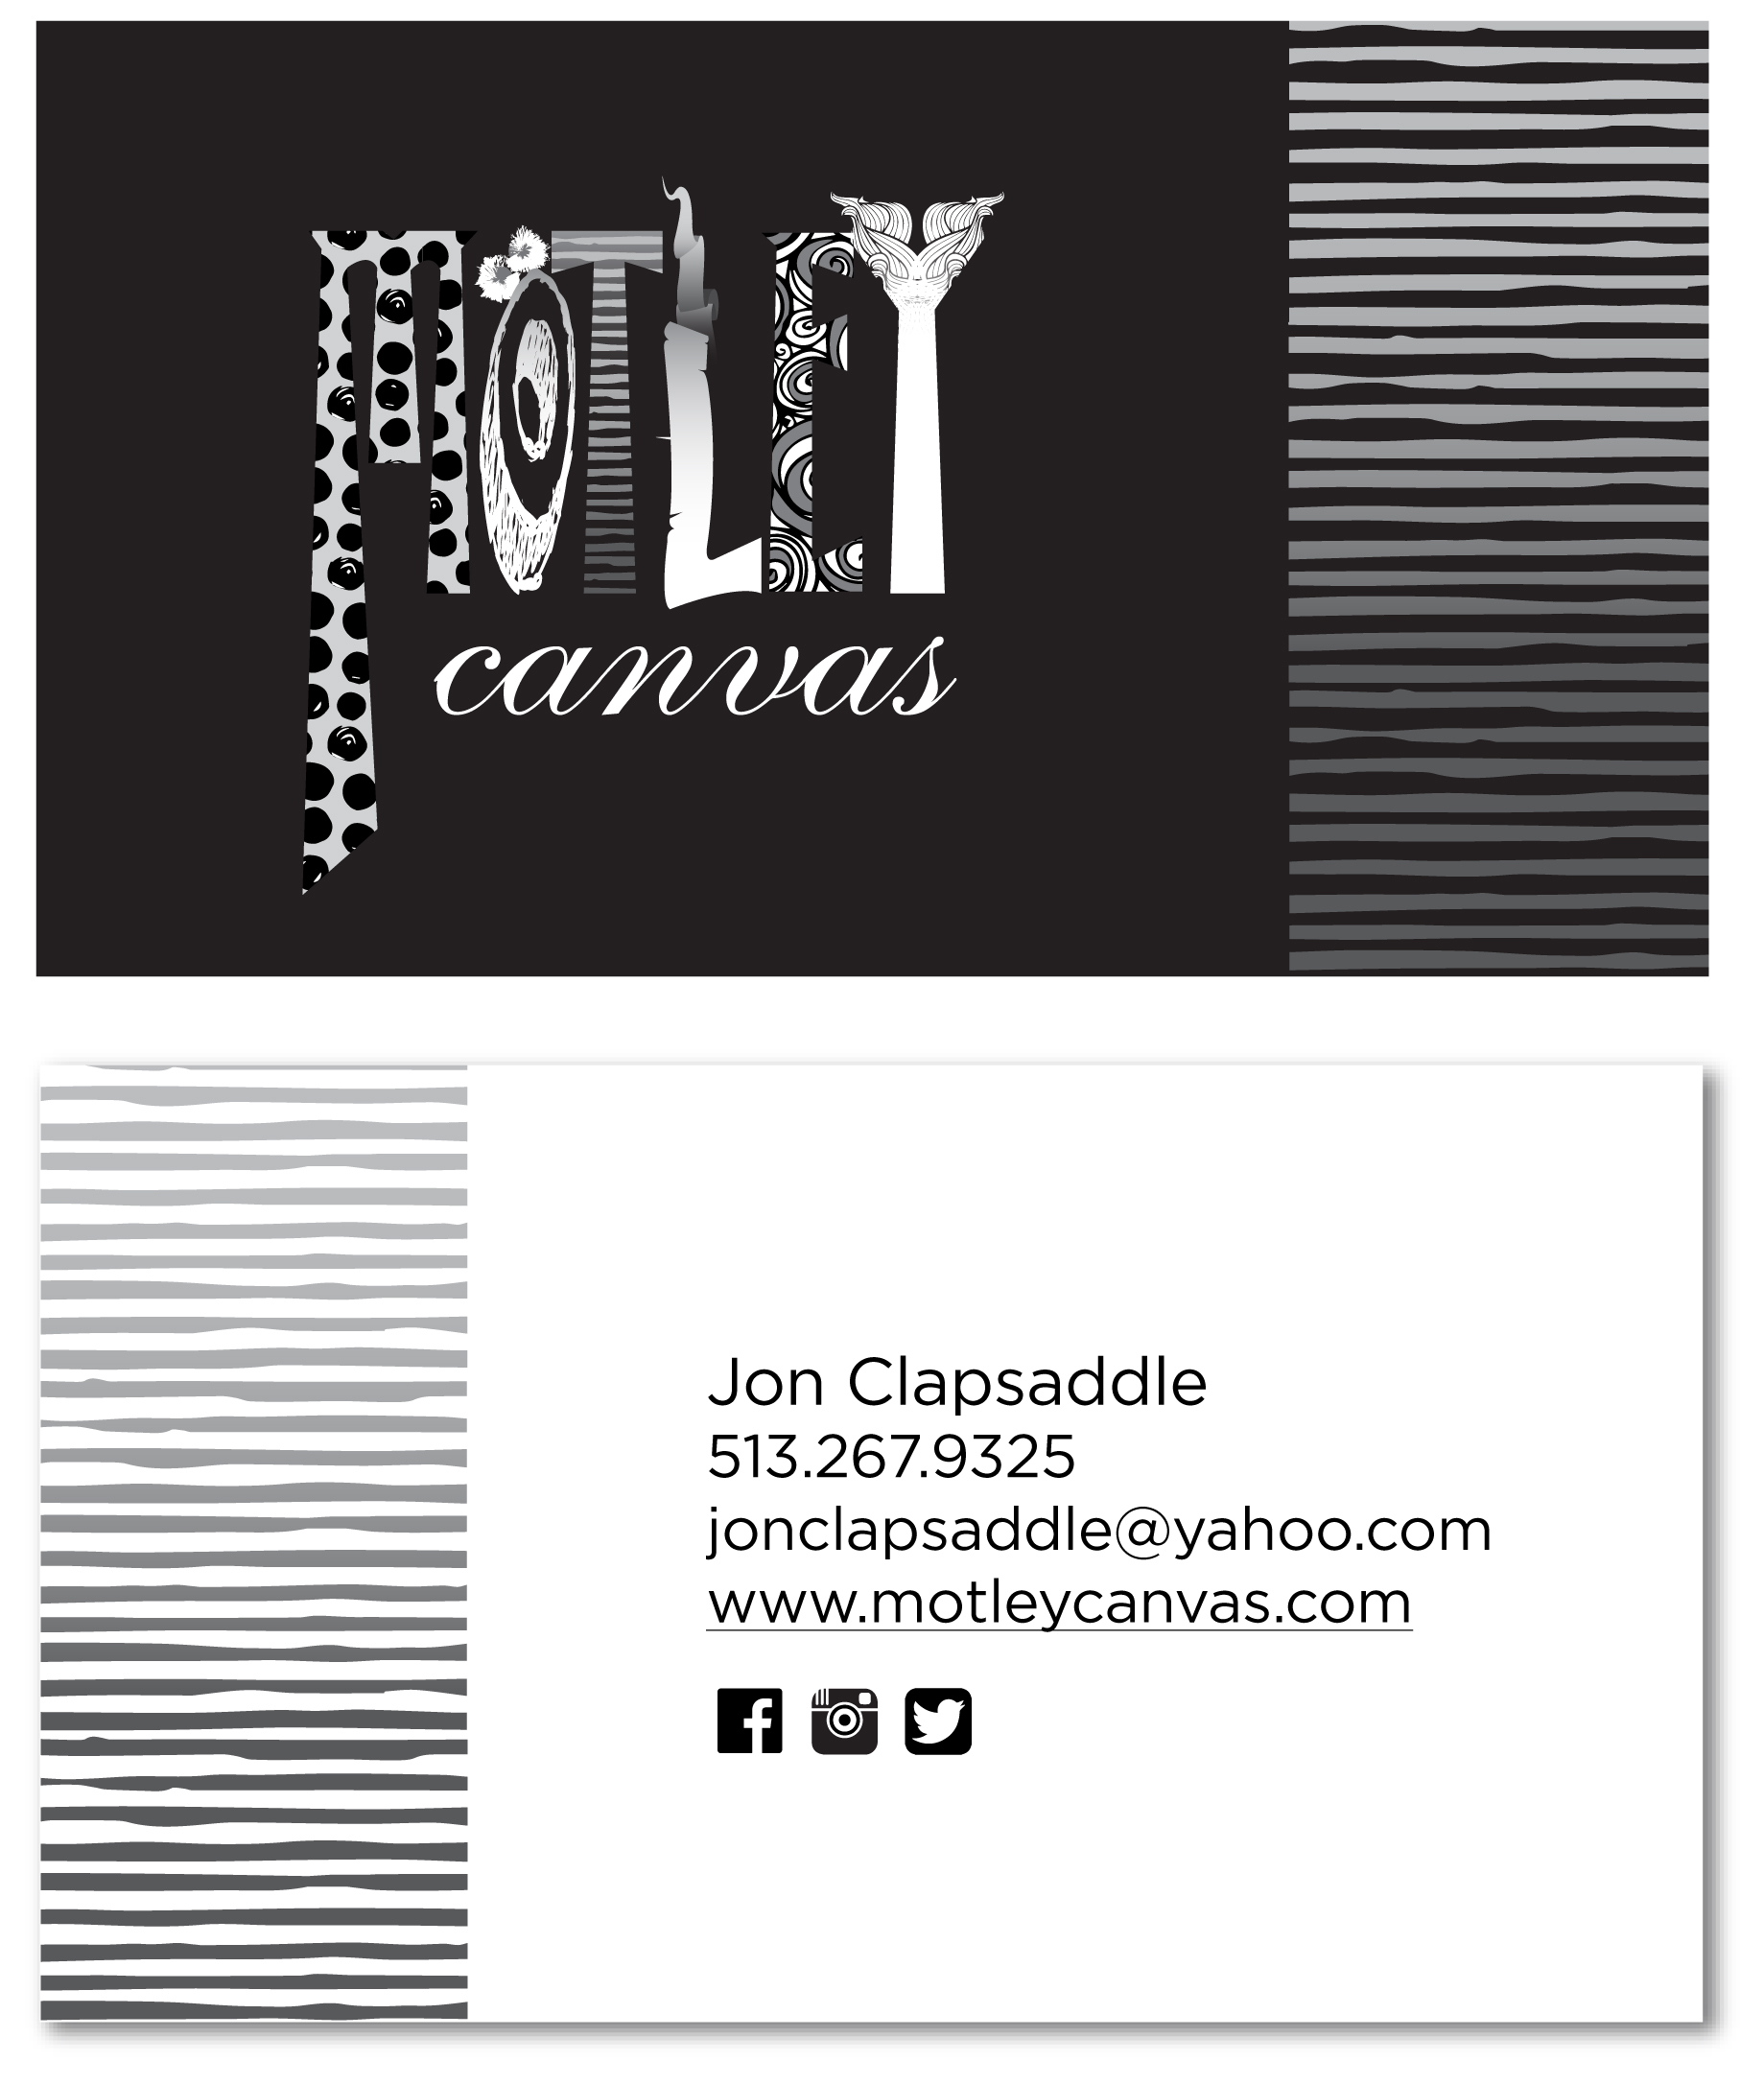 Motley Canvas Business Card